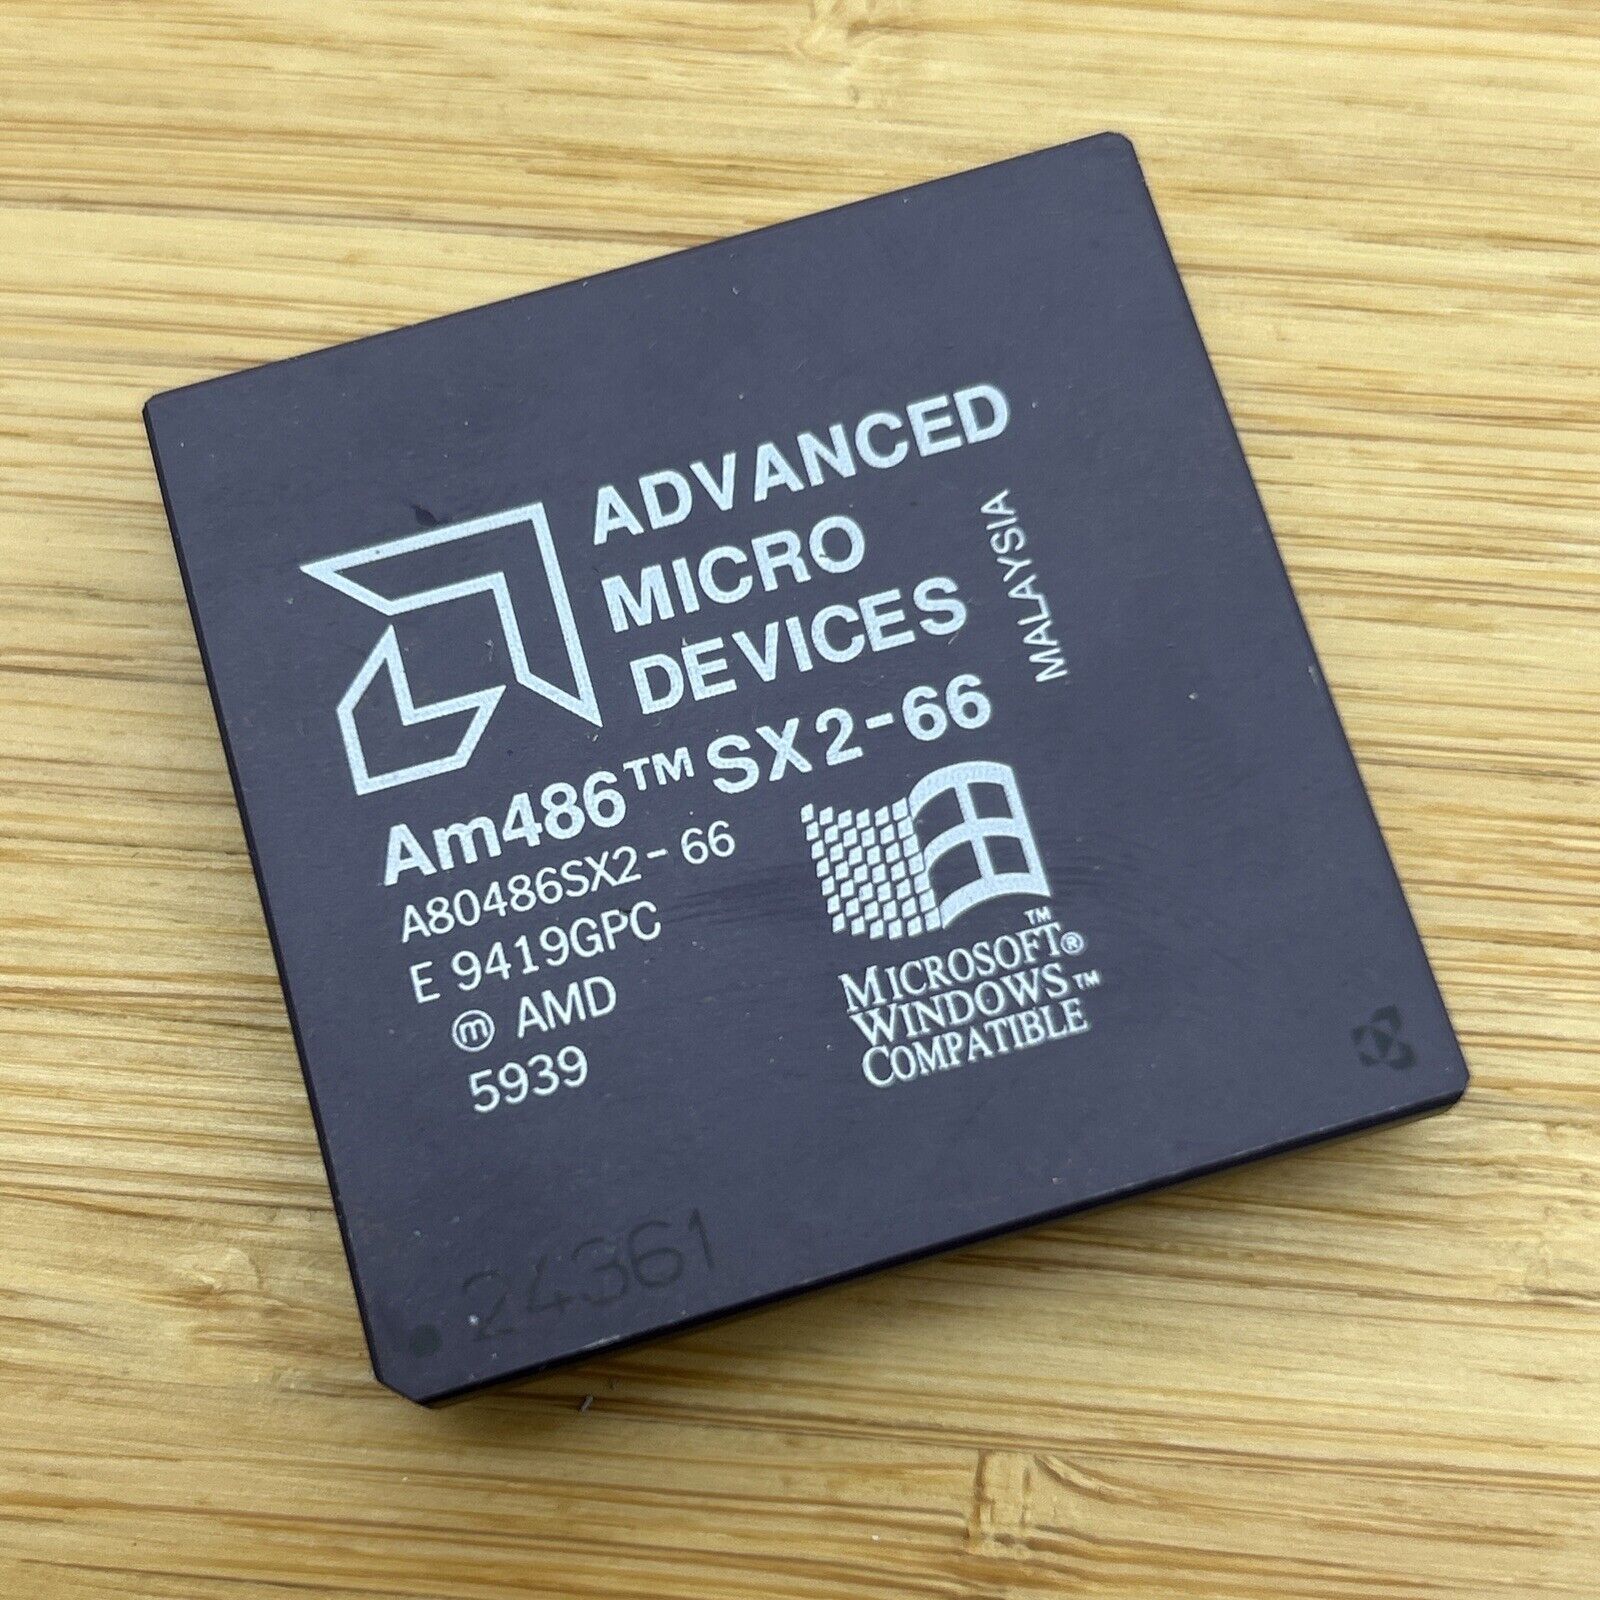 AMD 486 SX2 66 MHz CPU A80486SX2-66 Very Rare Vintage Processor AM486